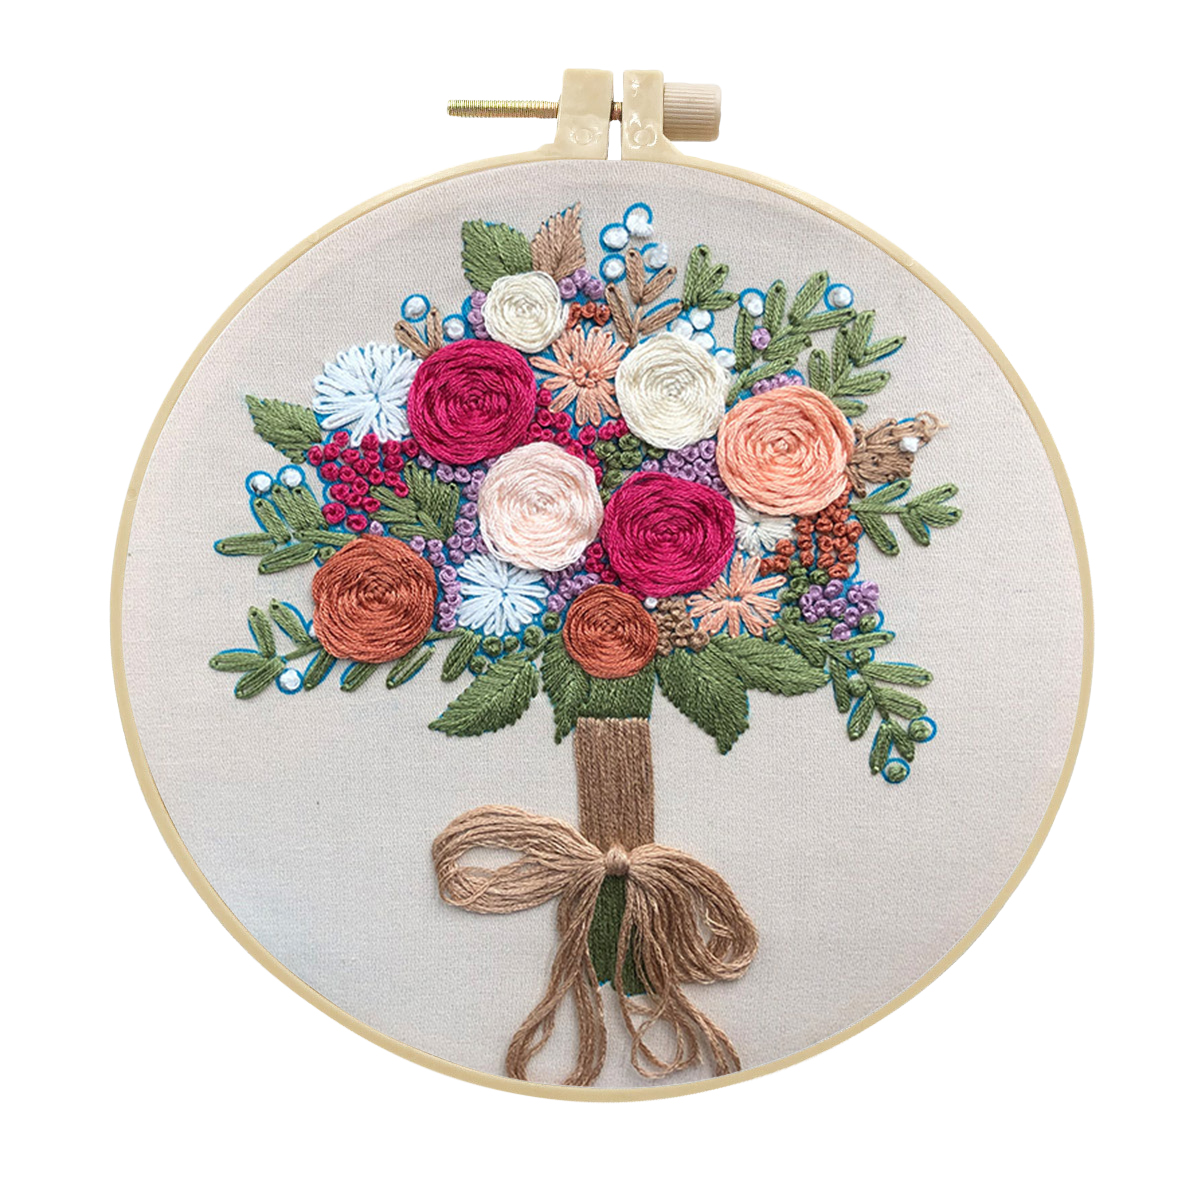 DIY Handmade Embroidery Kit Craft Cross Stitch Kits Beginner - Blooming flowers Bouquet Pattern